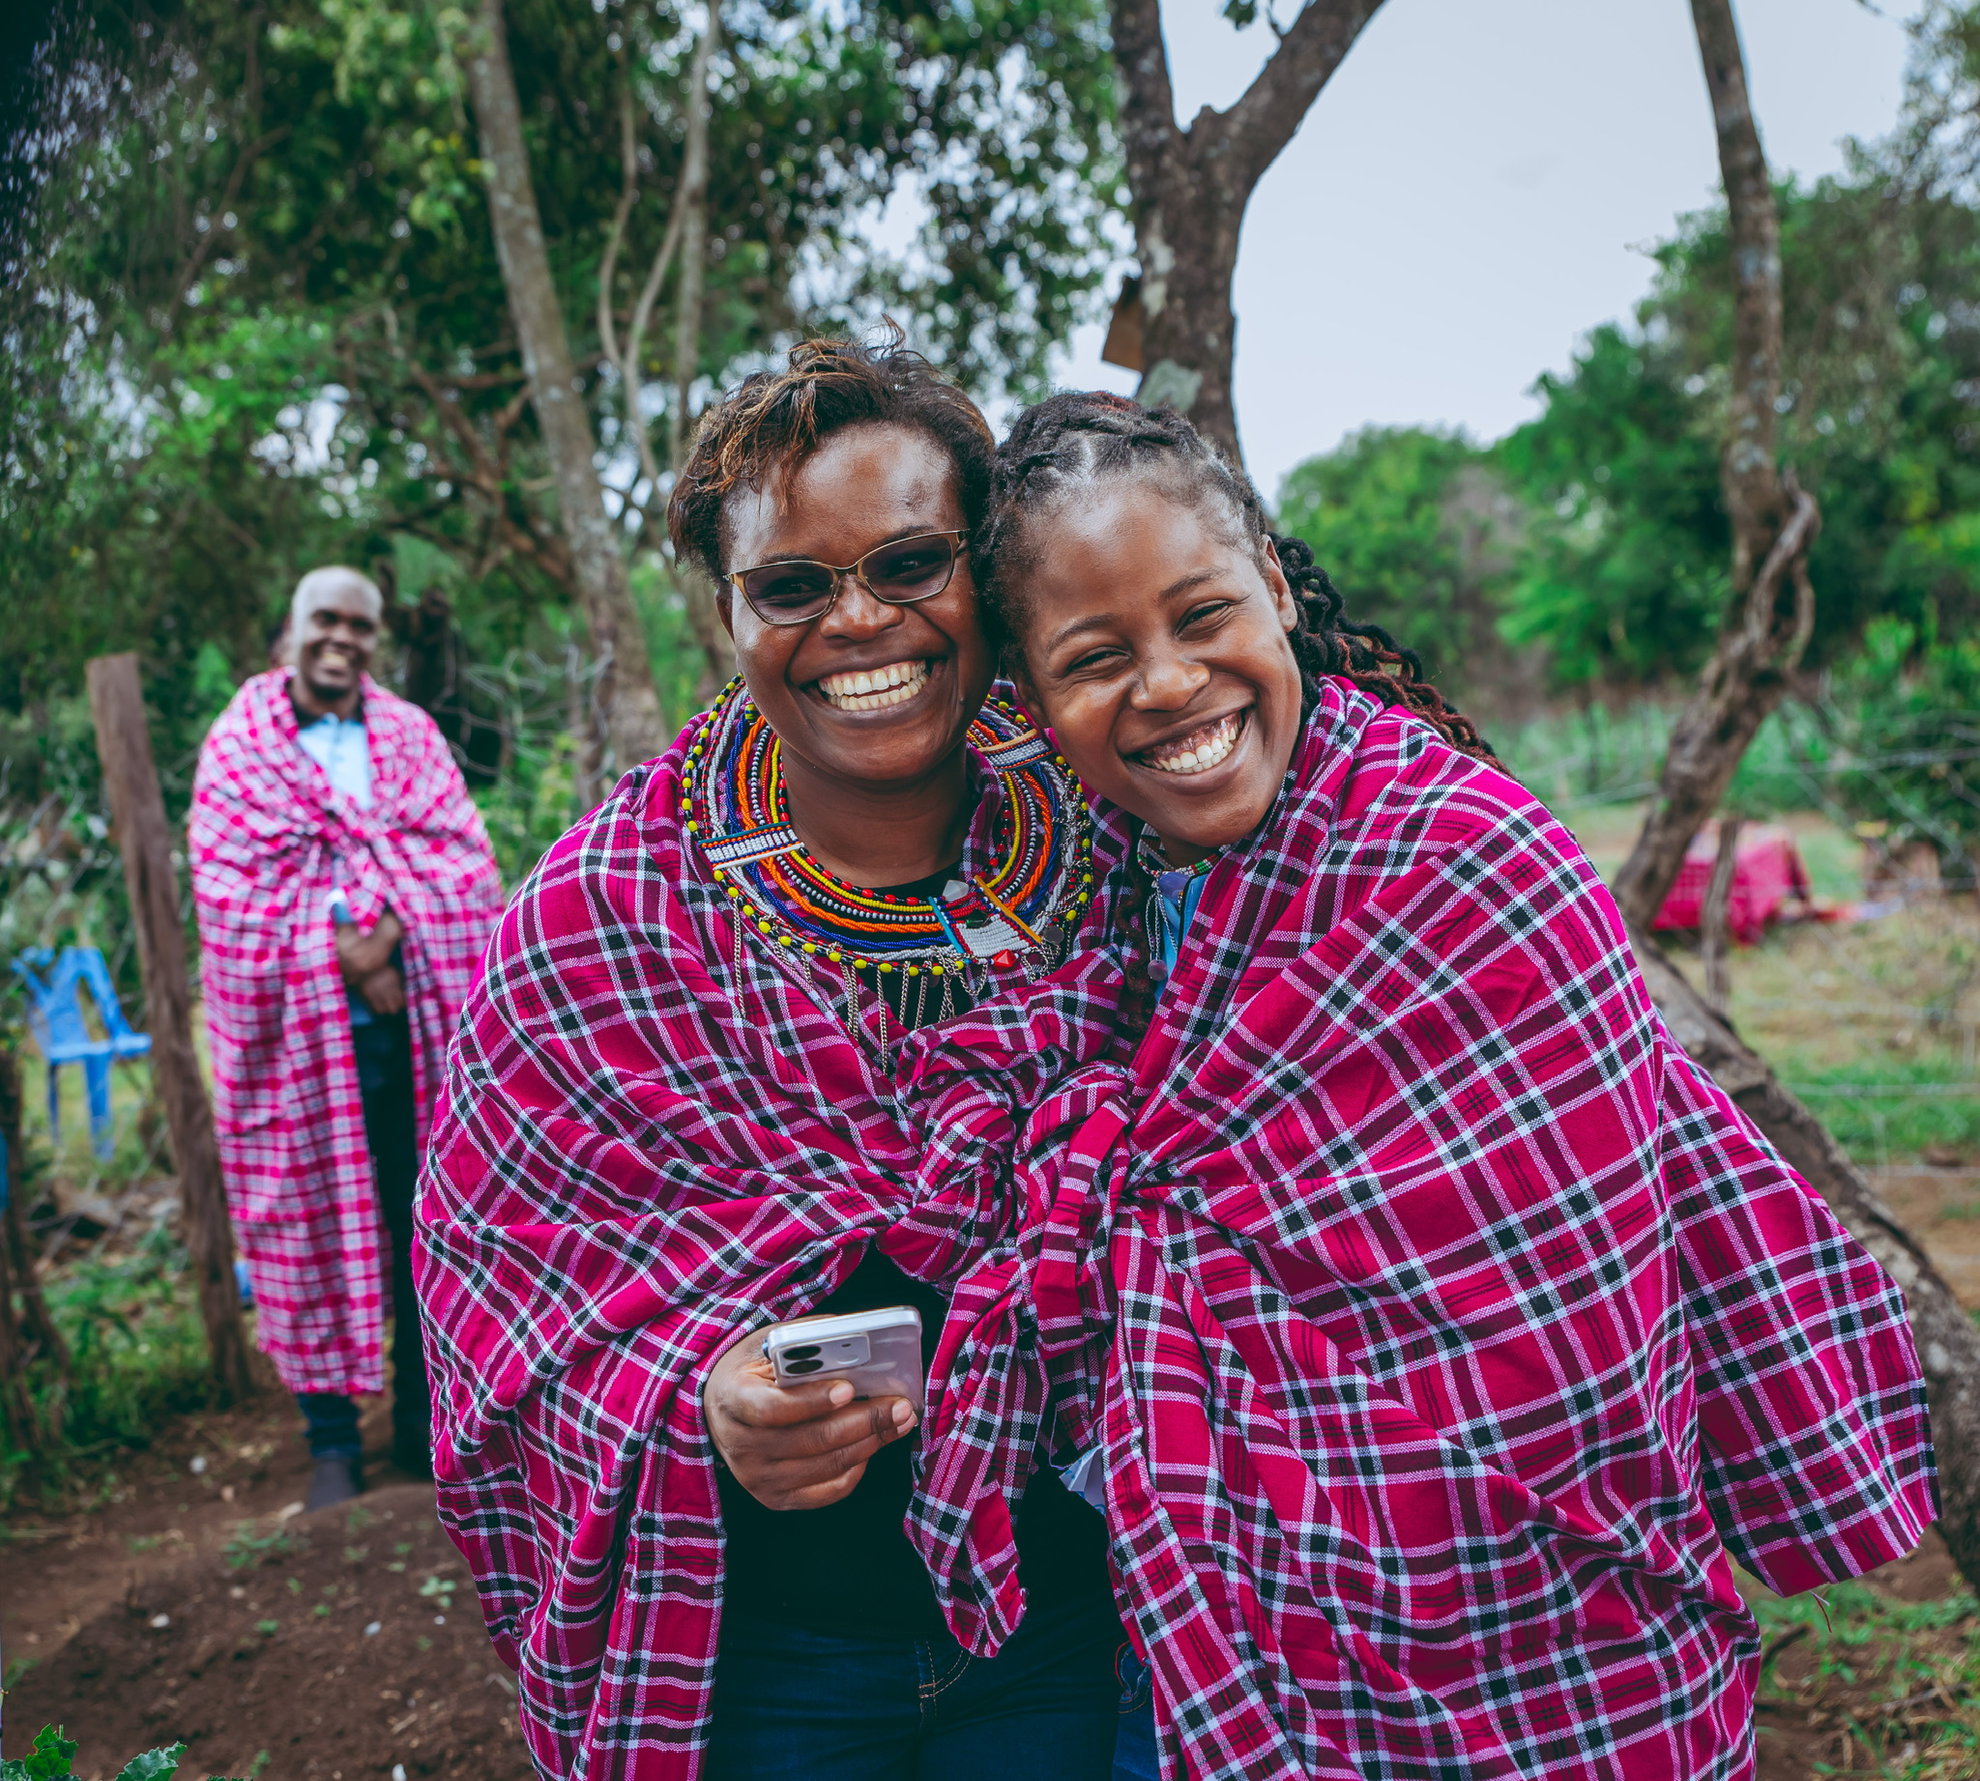 Rose Wamalwa, WEA East Africa Program Director, with a WEA/WWANC Leader in Kenya. Photo Credit: Anthony Wanjiku